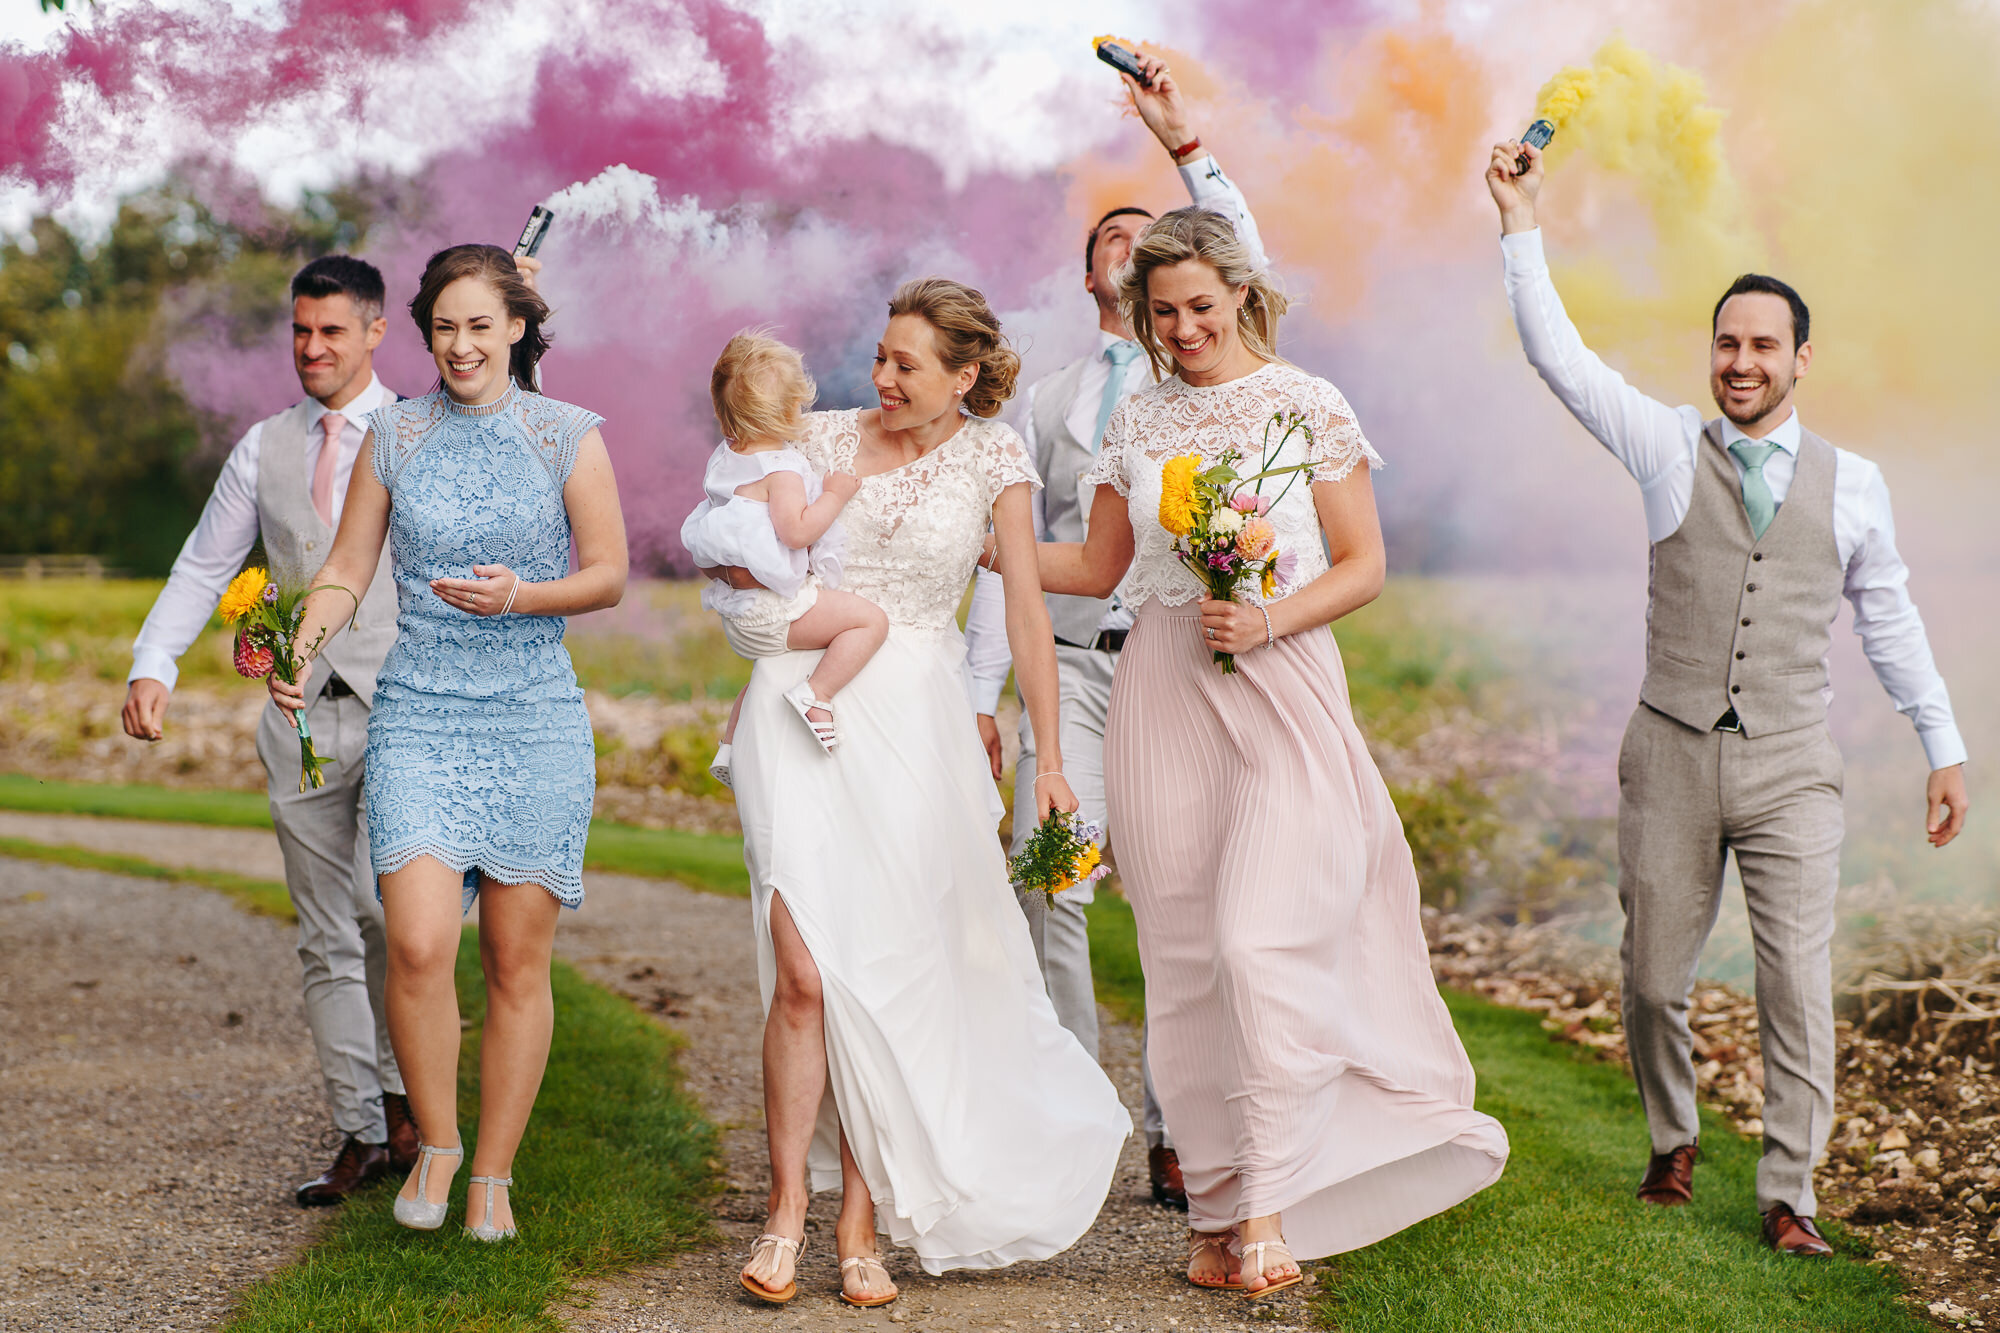 Smoke Bomb Yorkshire Wedding Photographer Martyn Hand Covid Wedd